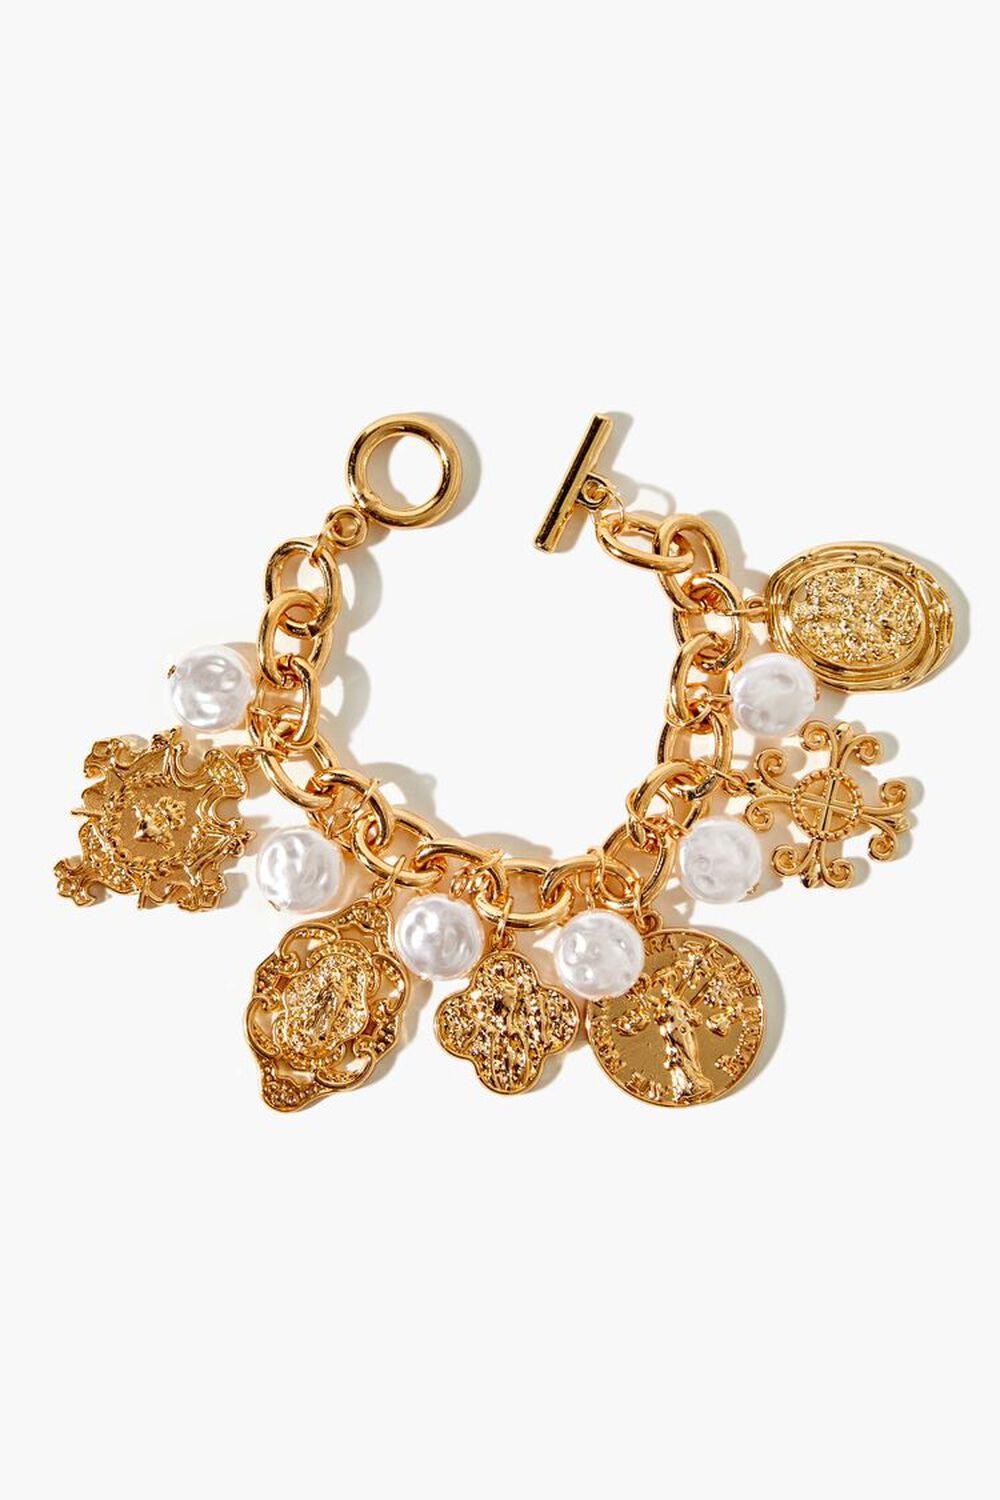 GOLD Ornate Faux Pearl Charm Bracelet, image 1